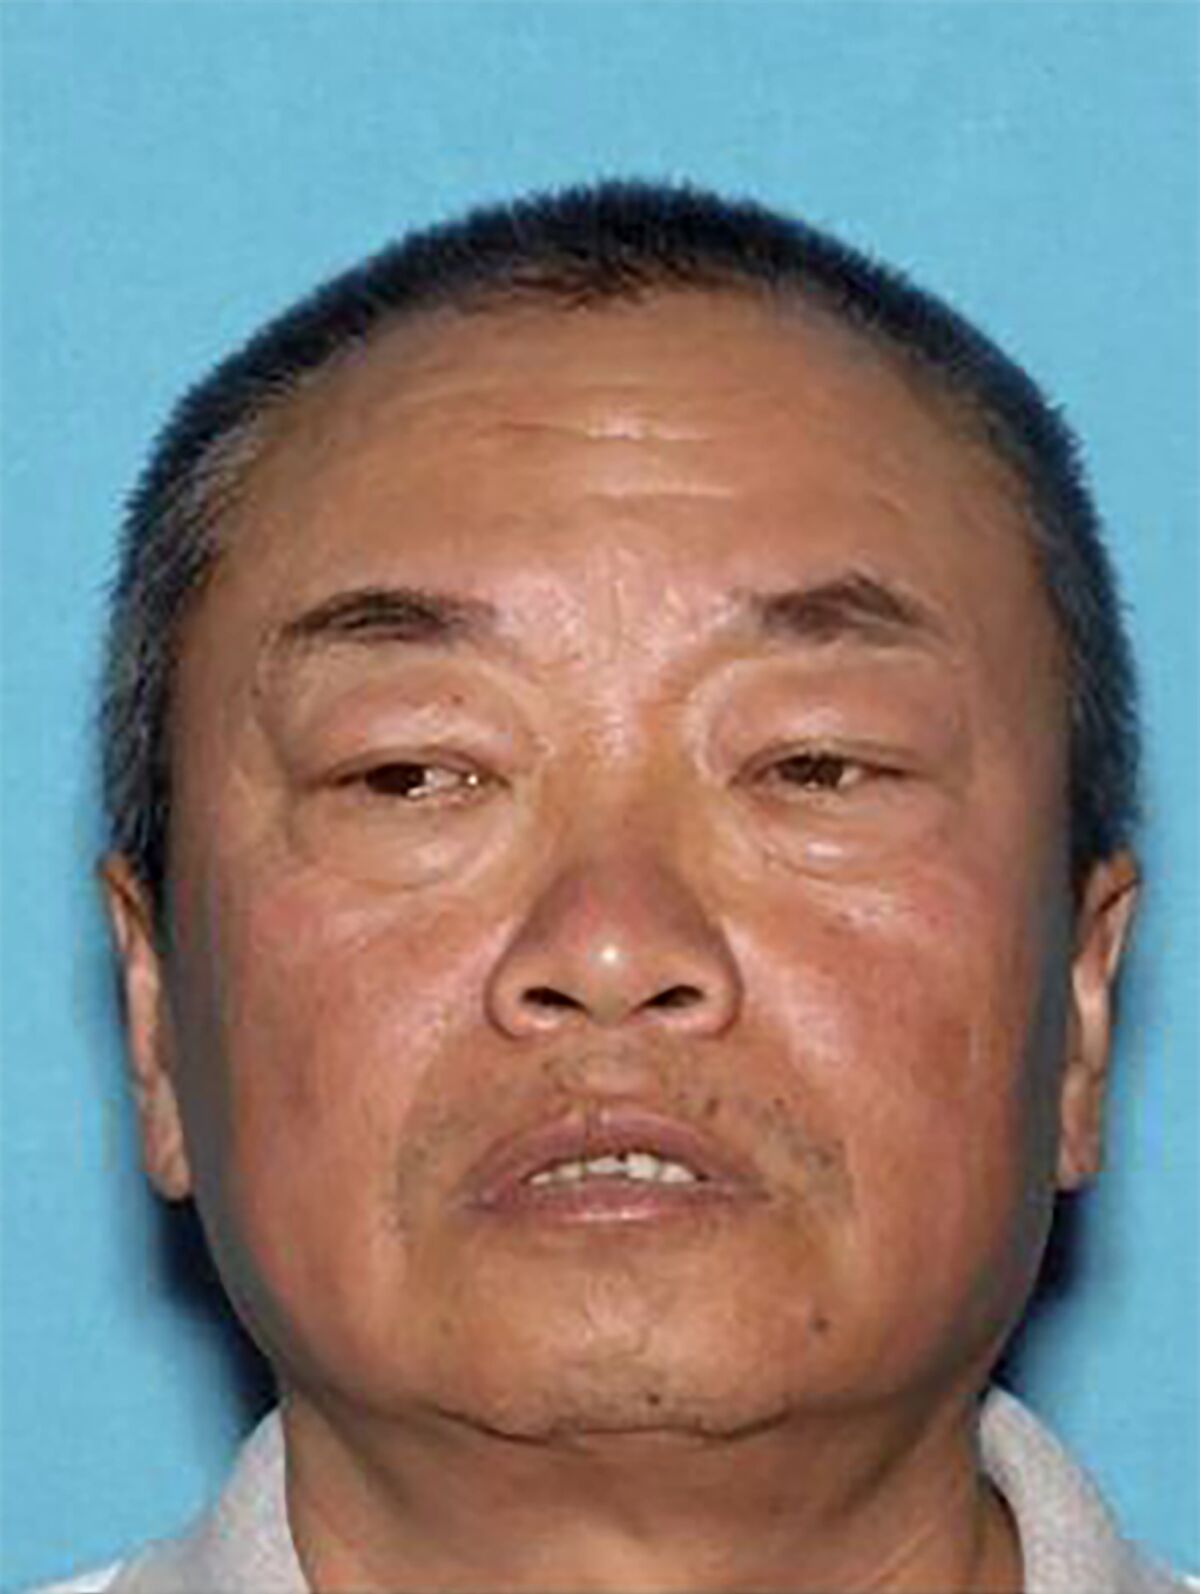 A mugshot of suspect Chunli Zhao